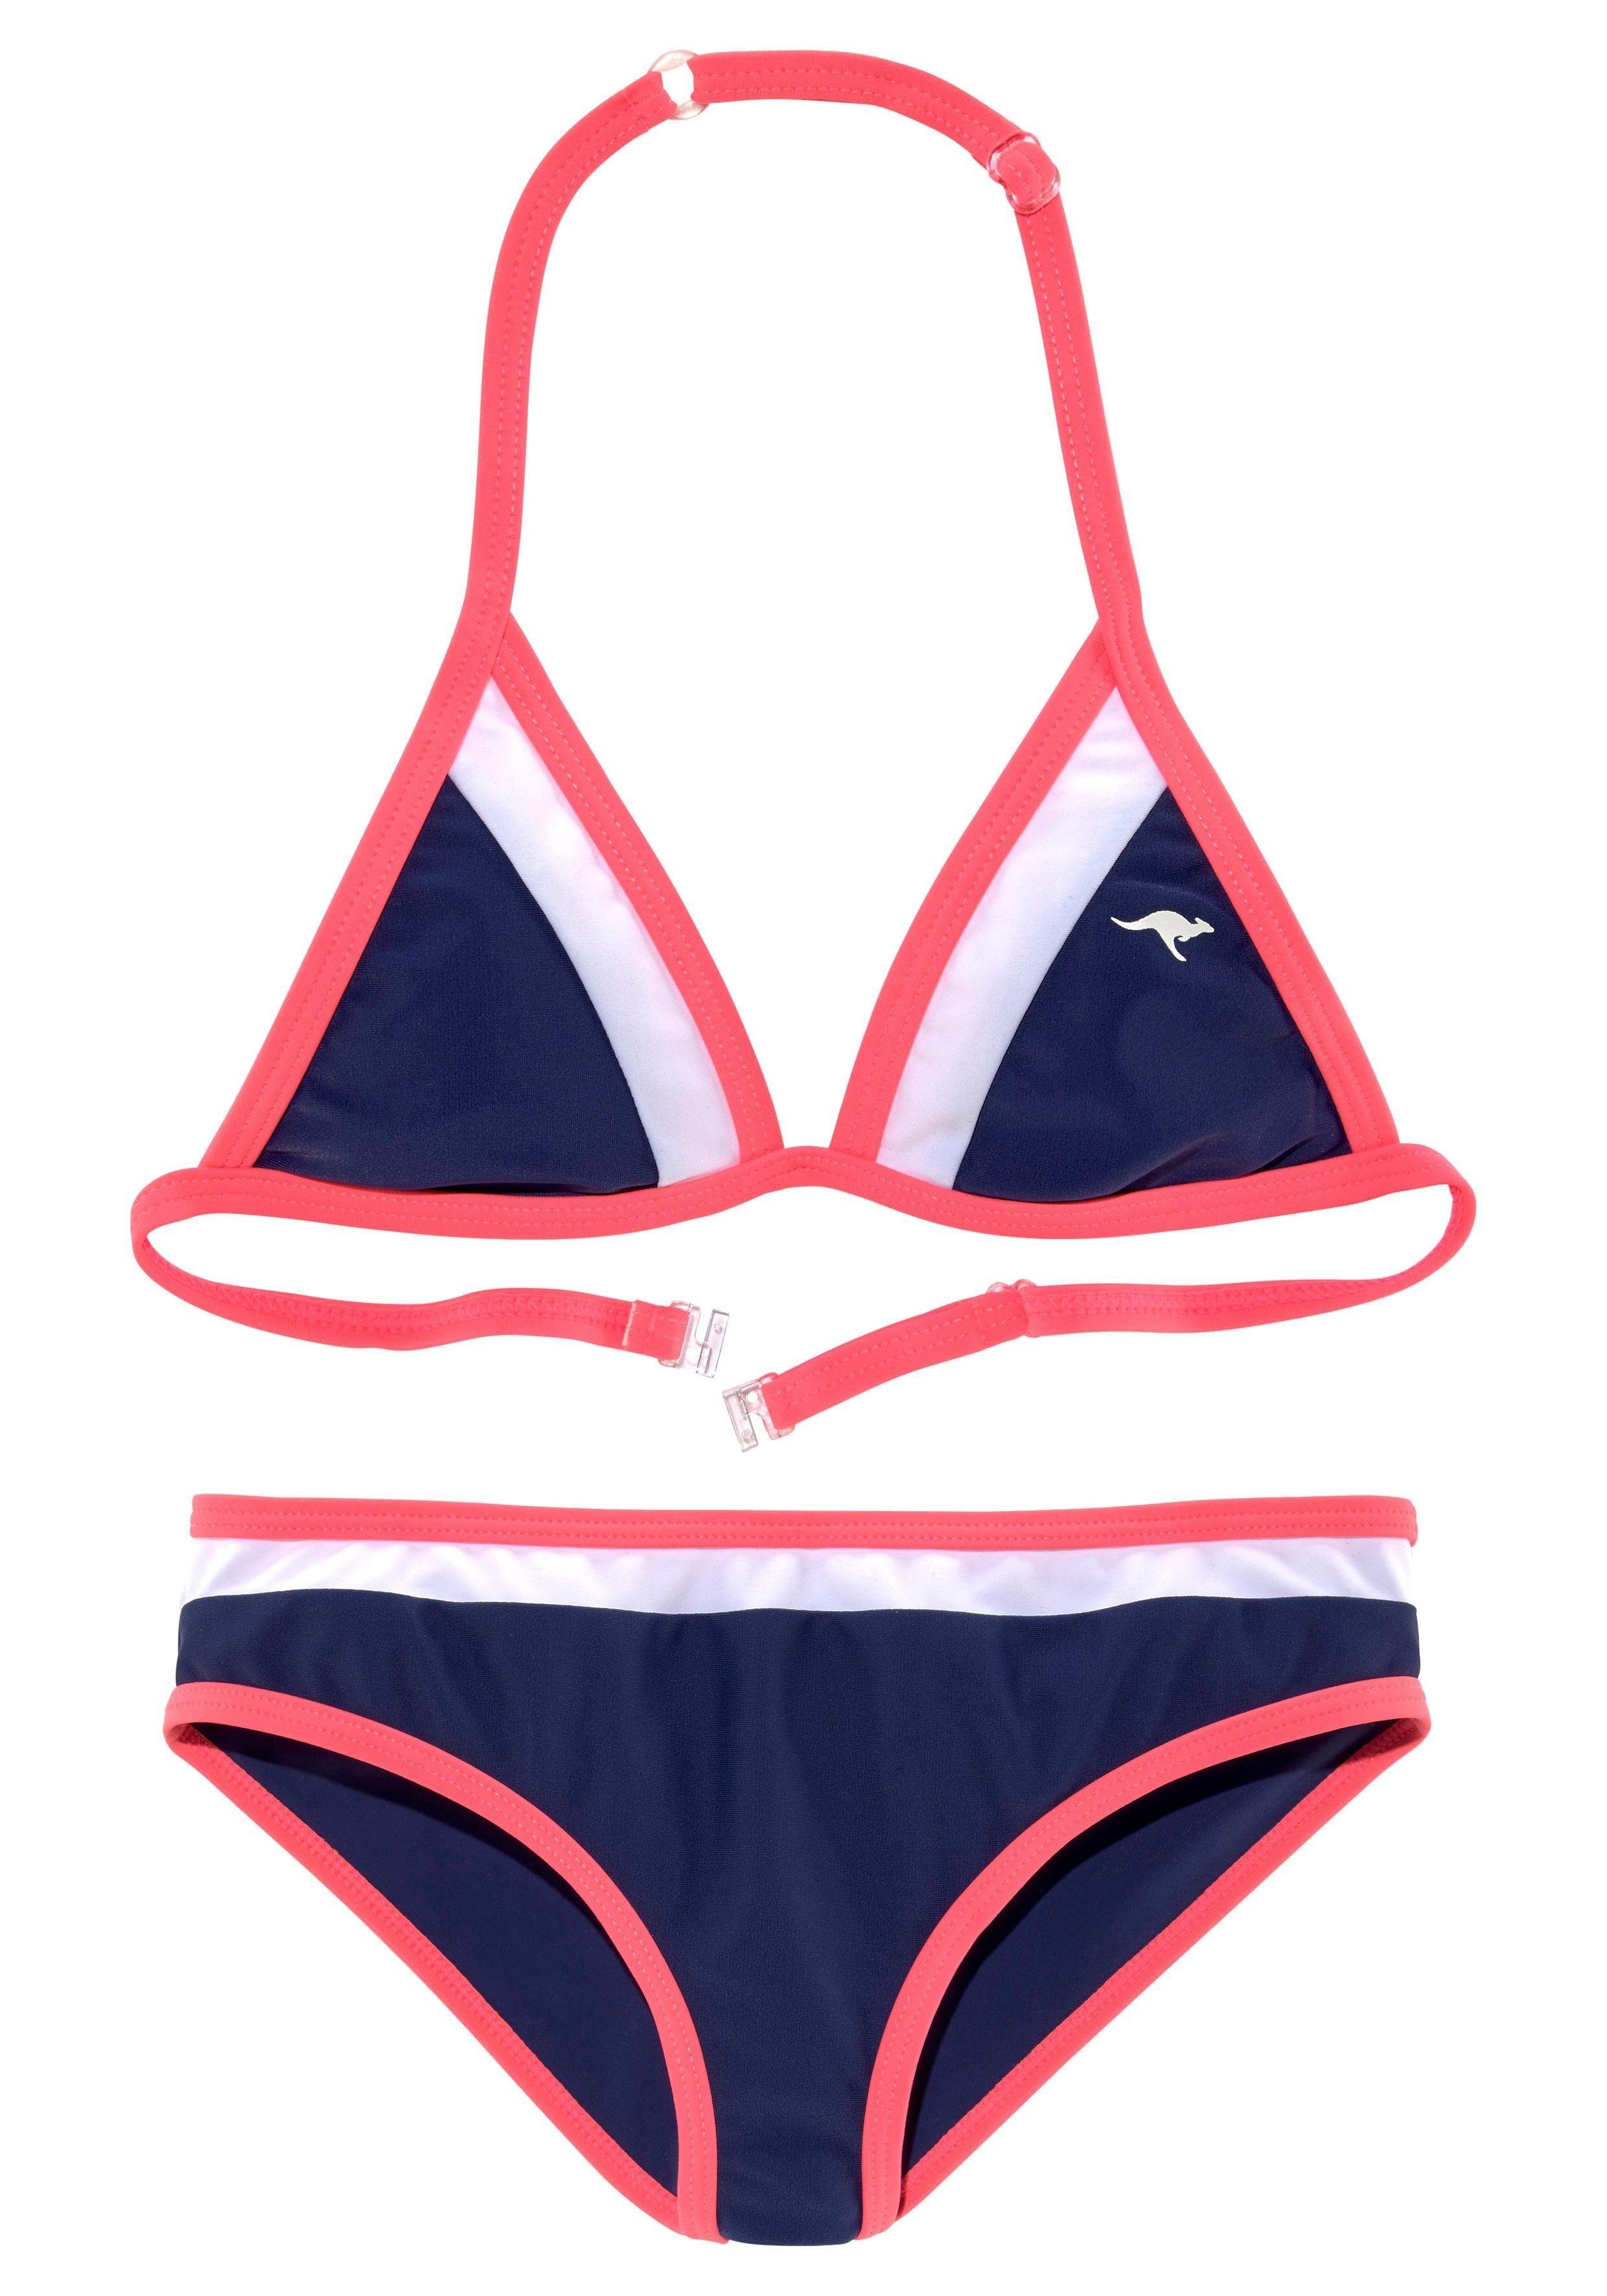 KangaROOS Triangel-Bikini Energy Kids im coolen Colorblocking-Design | Triangel-Bikinis